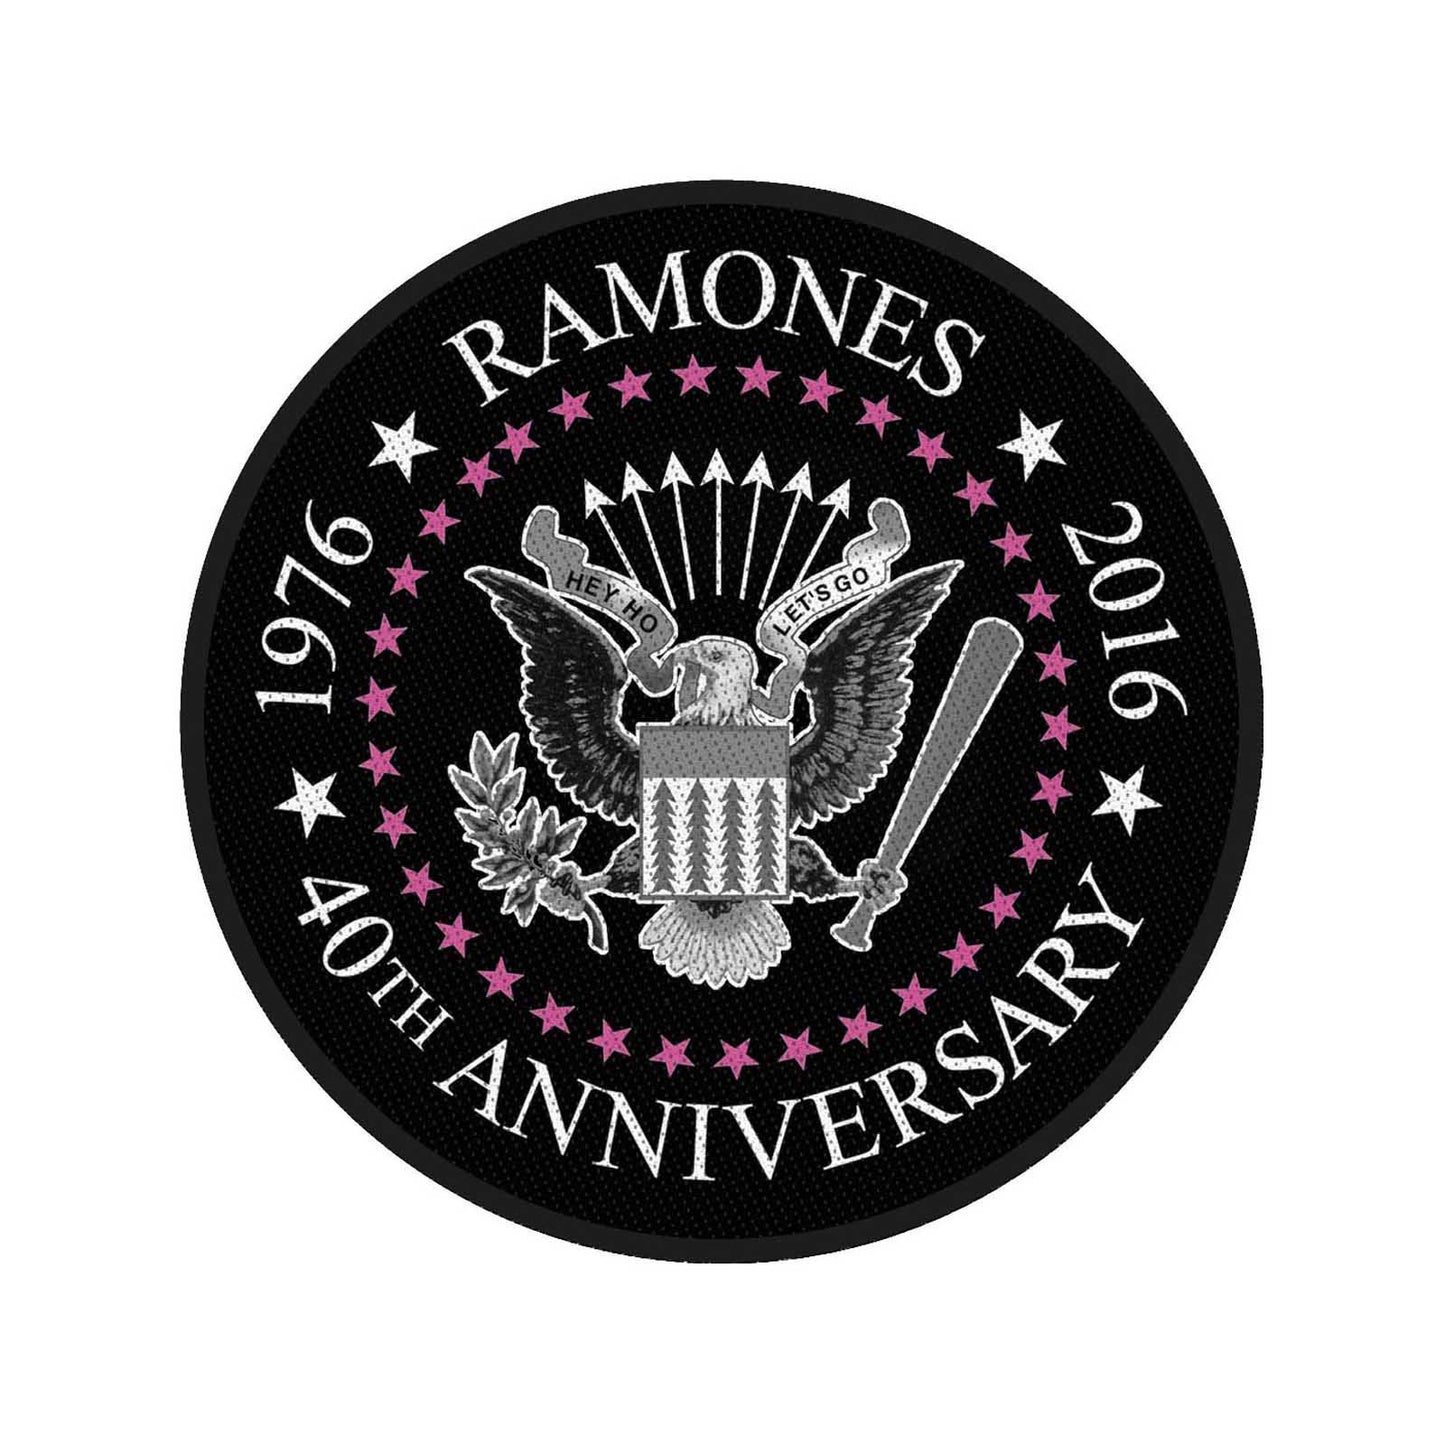 RAMONES STANDARD PATCH: 40TH ANNIVERSARY